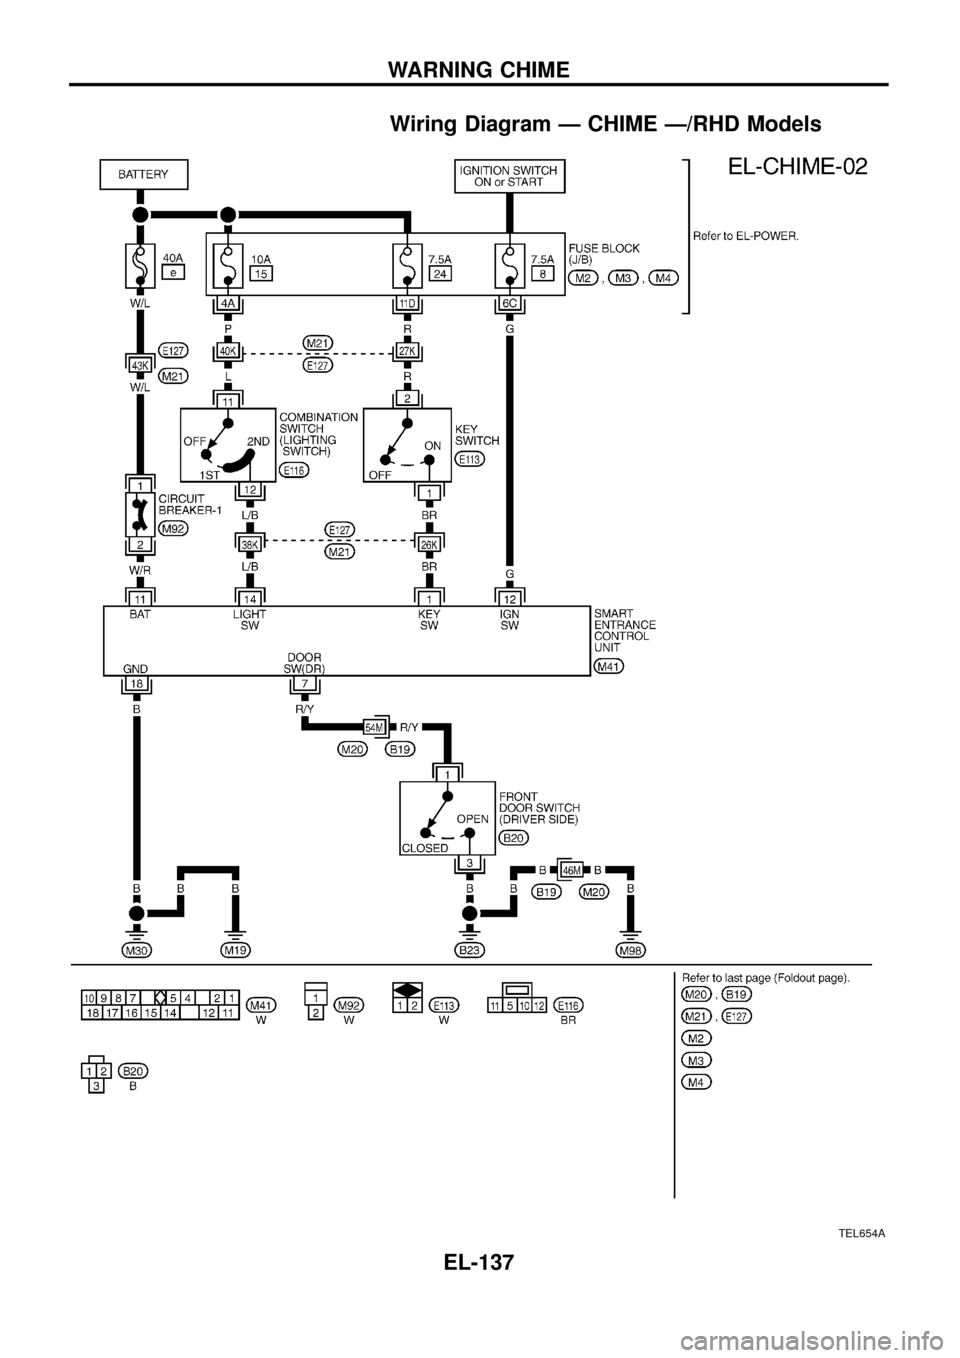 NISSAN PATROL 1998 Y61 / 5.G Electrical System Owners Manual Wiring Diagram Ð CHIME Ð/RHD Models
TEL654A
WARNING CHIME
EL-137 